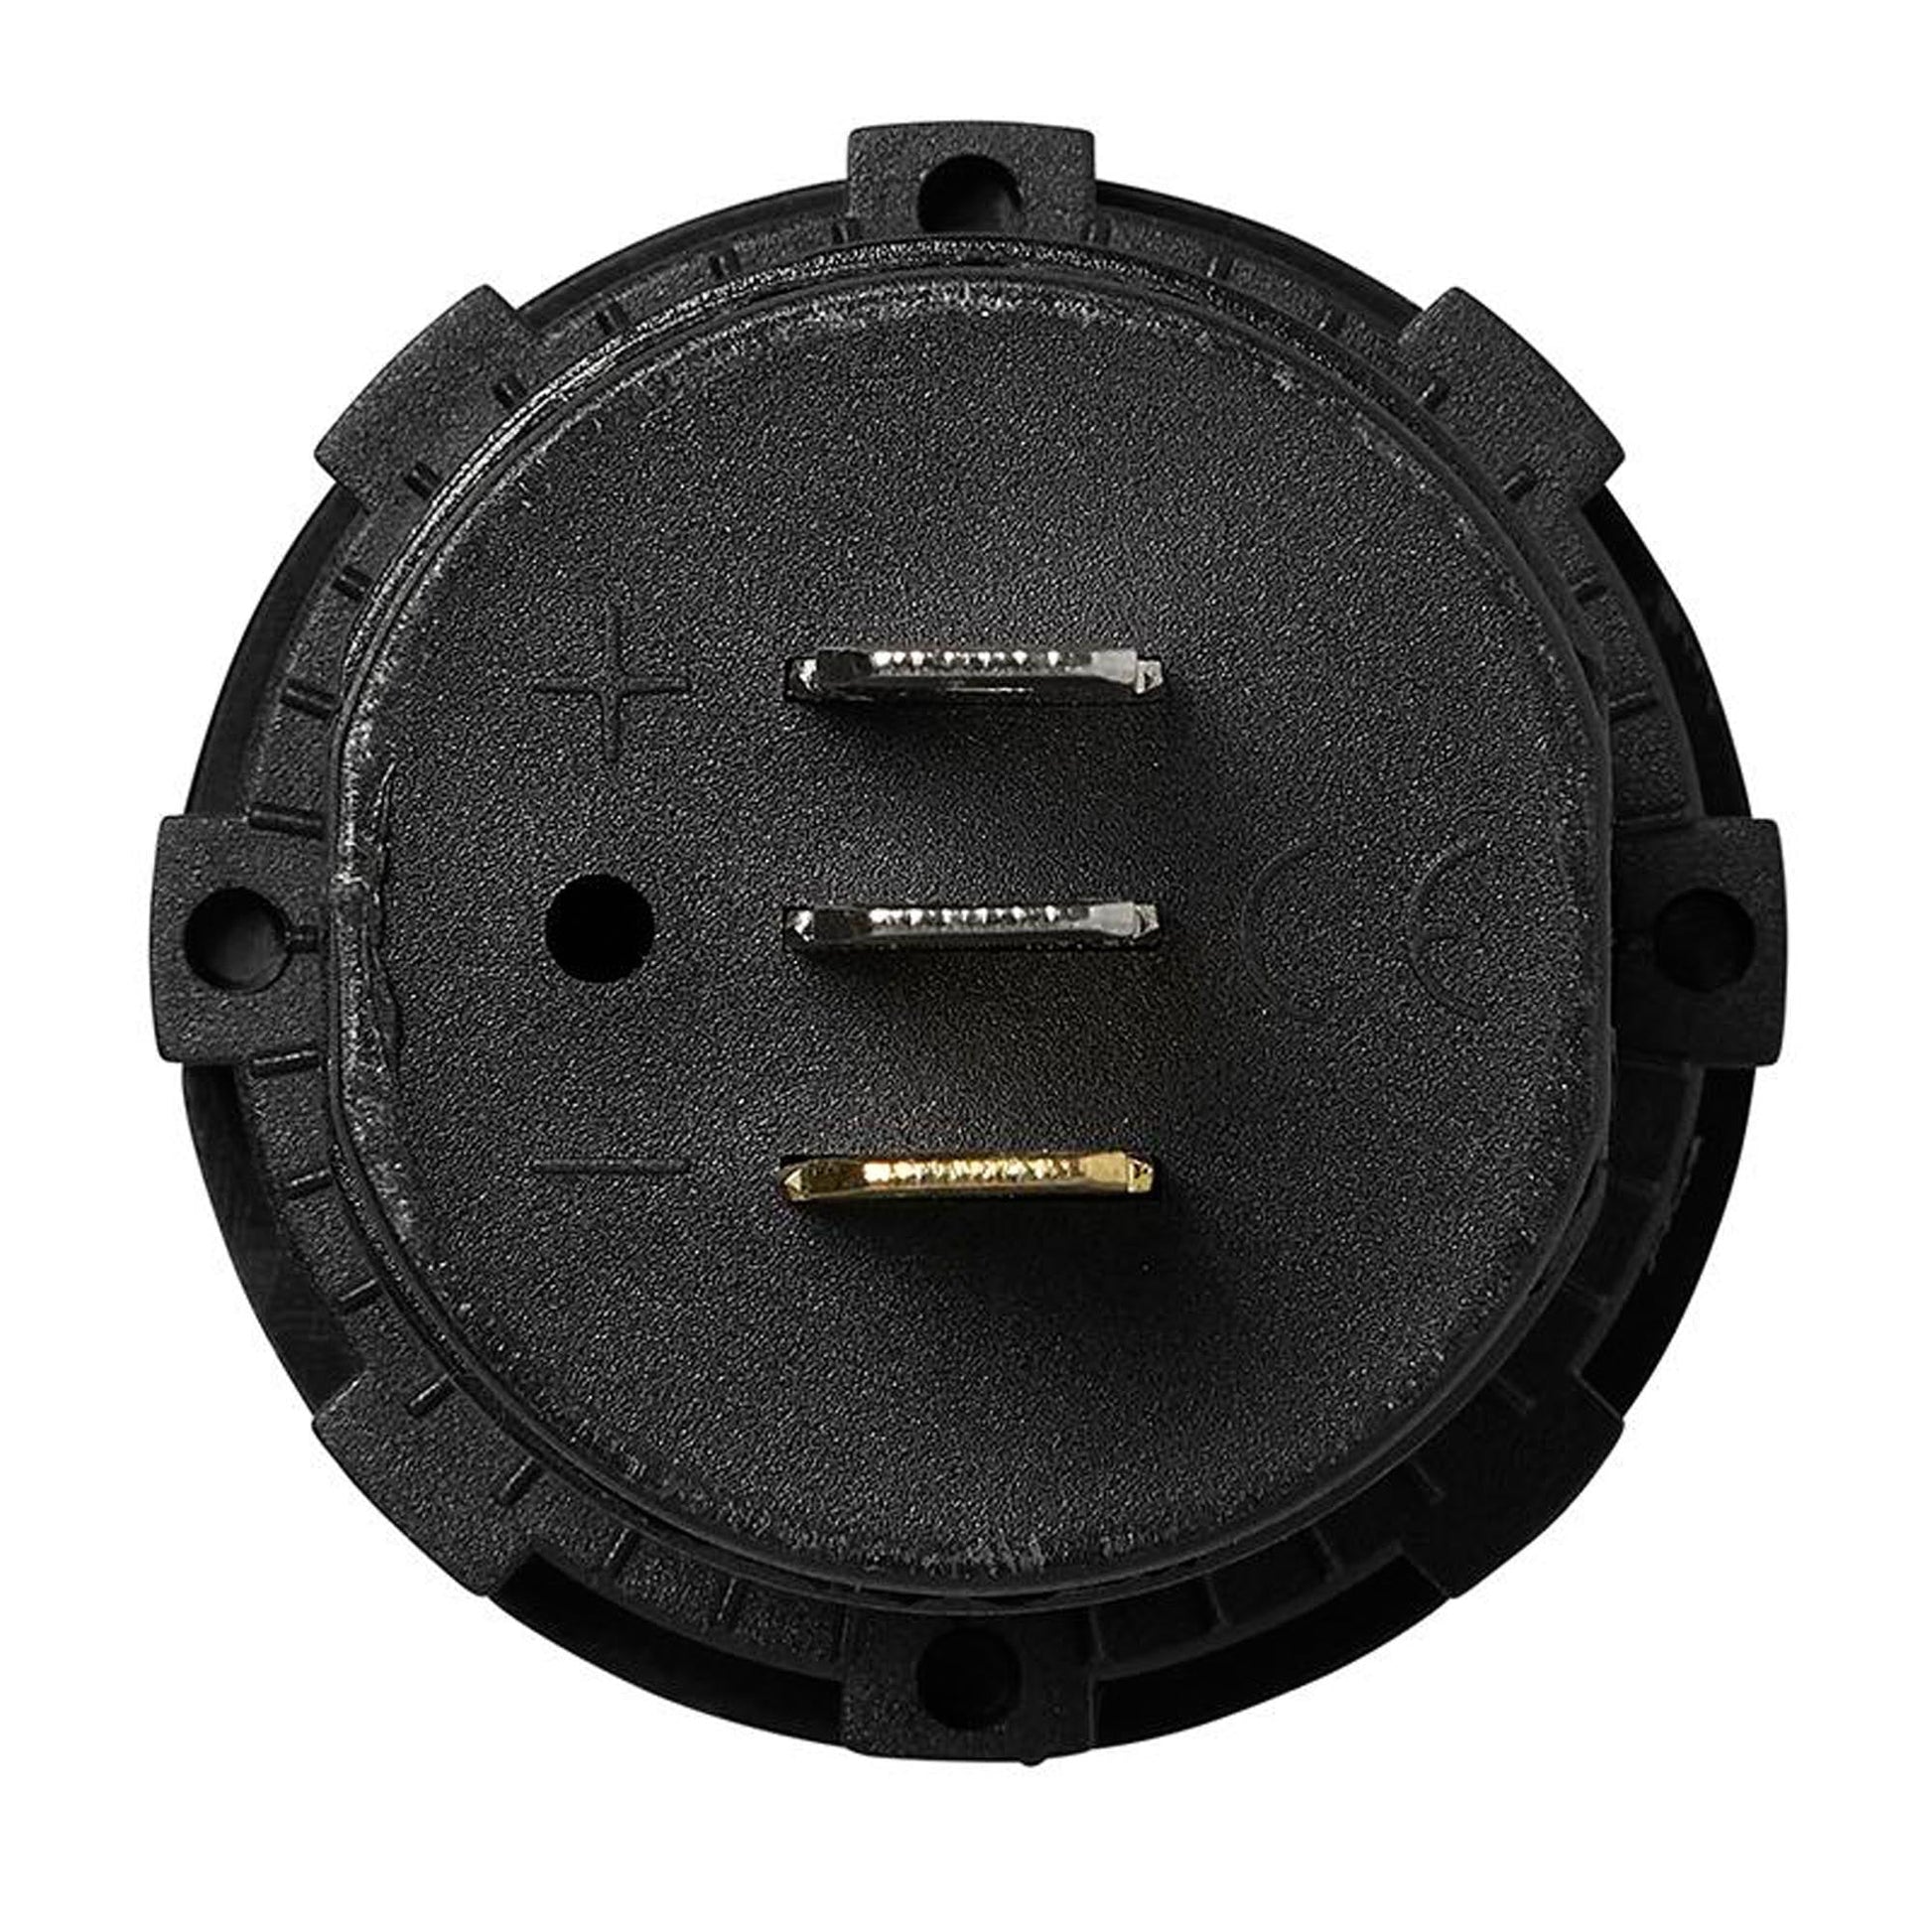 Einbau-Volt-Amperemeter 6-30V / 0-10A - TMN-shop.de